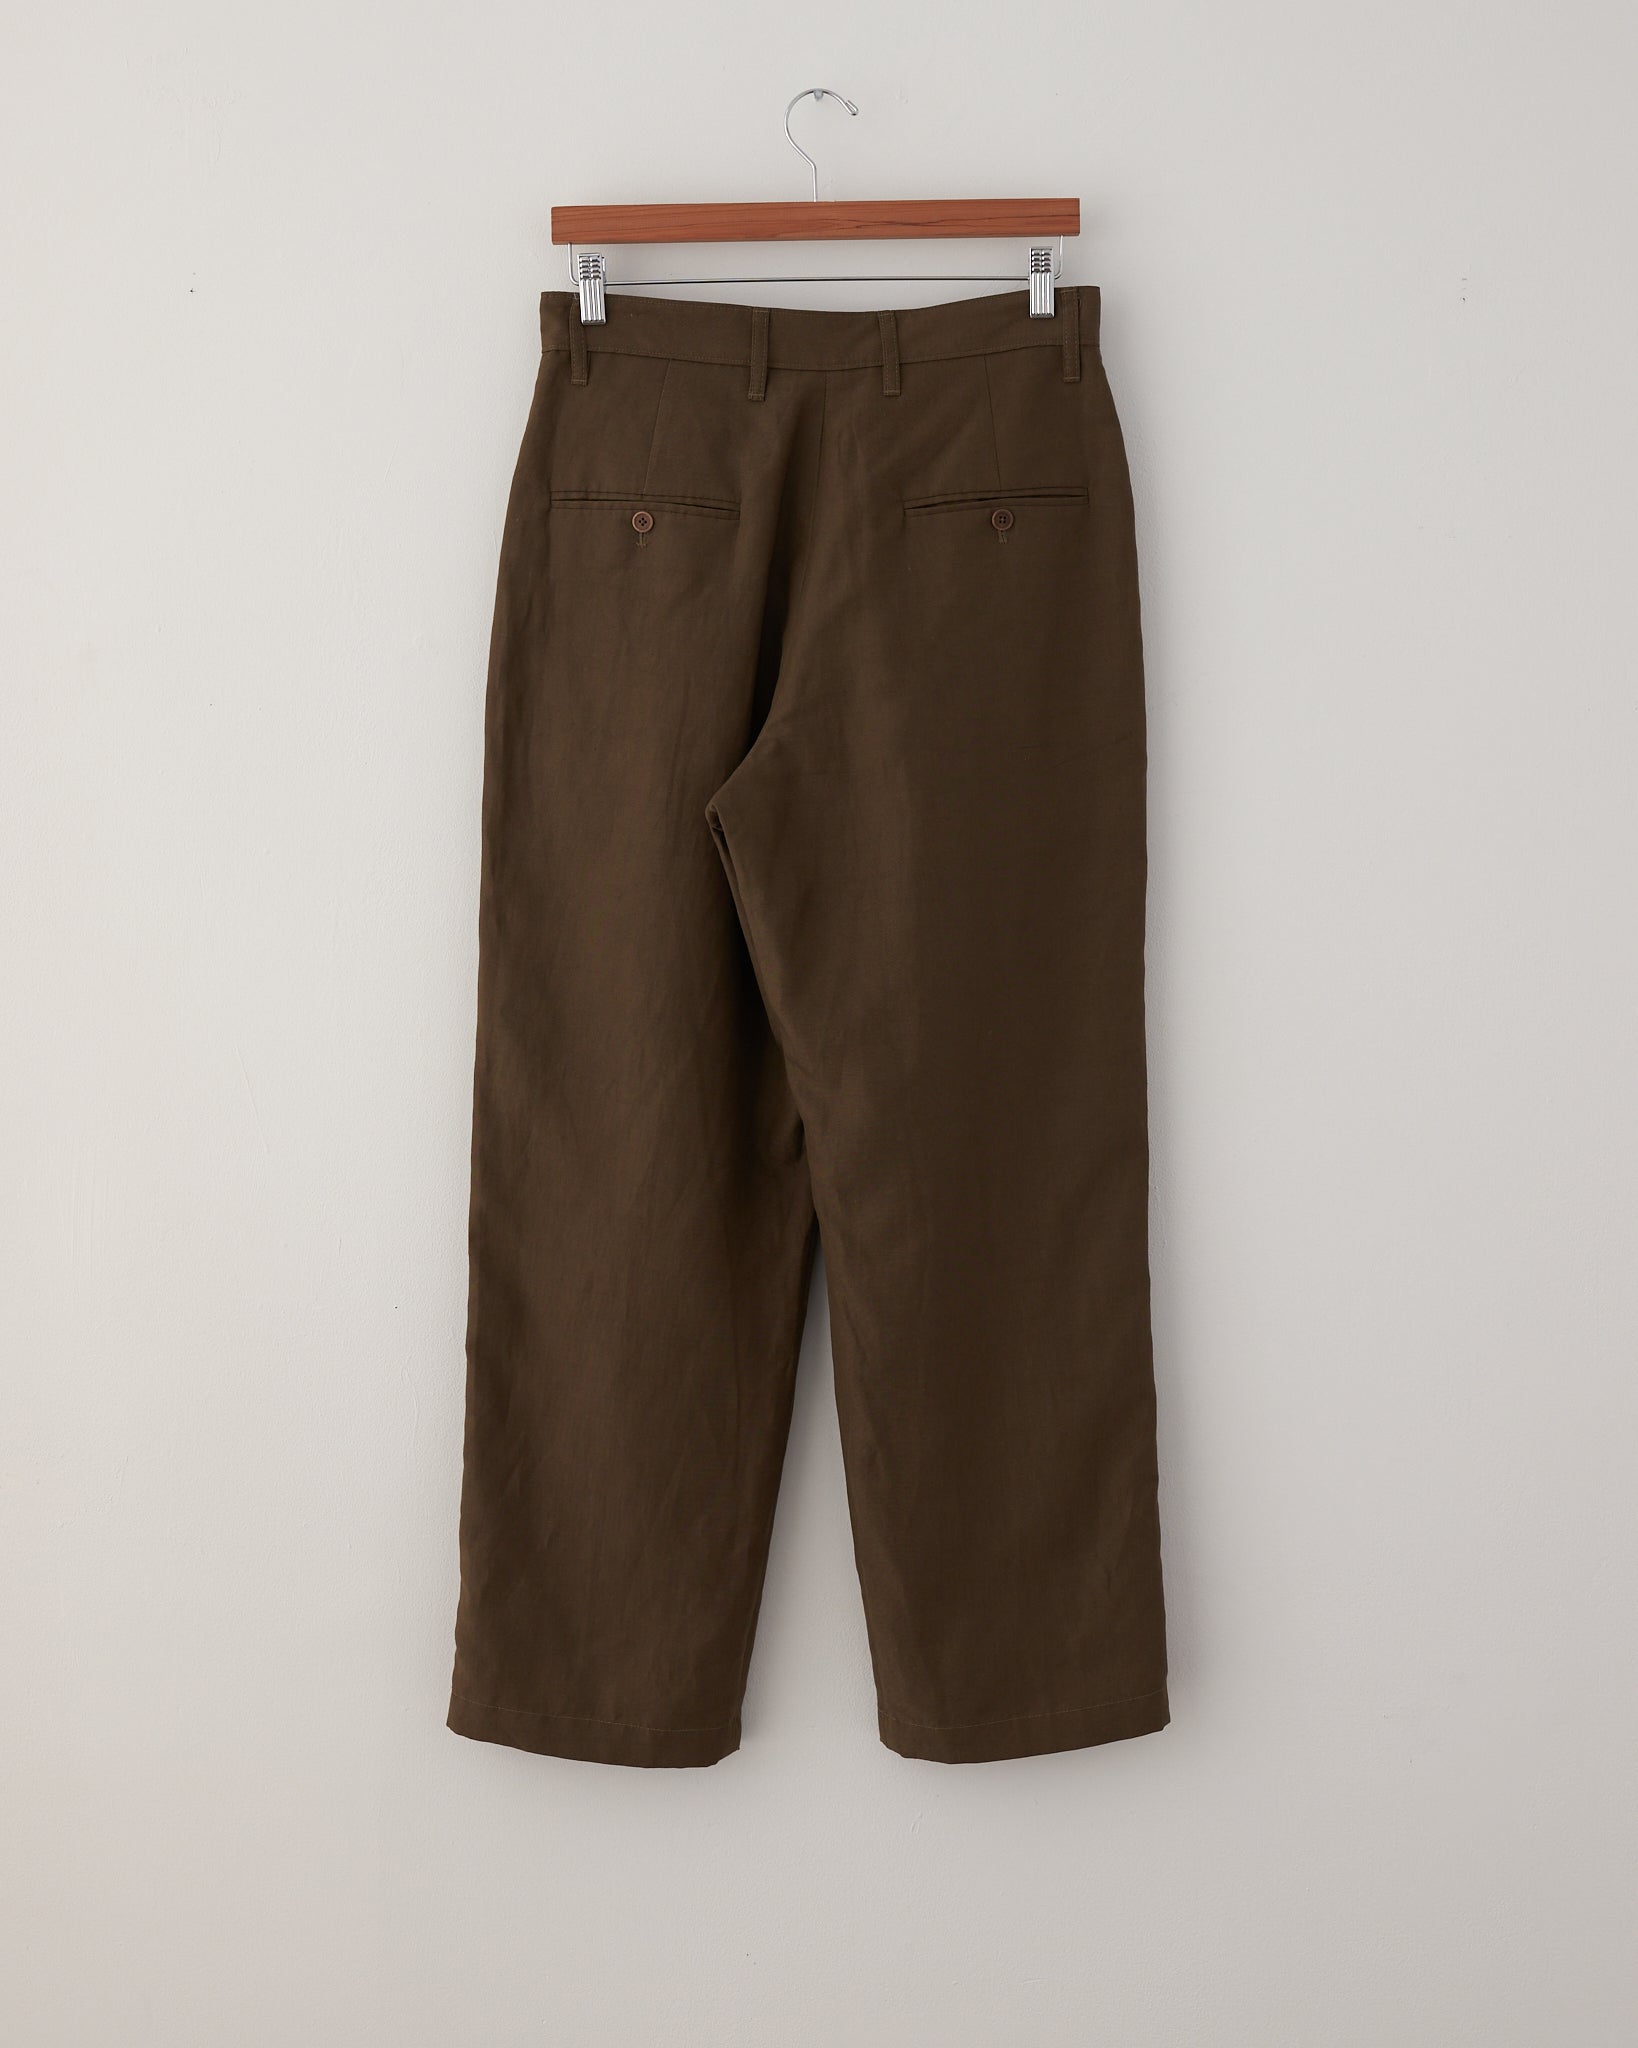 Double Pleat Pants, Brown Silk/Linen